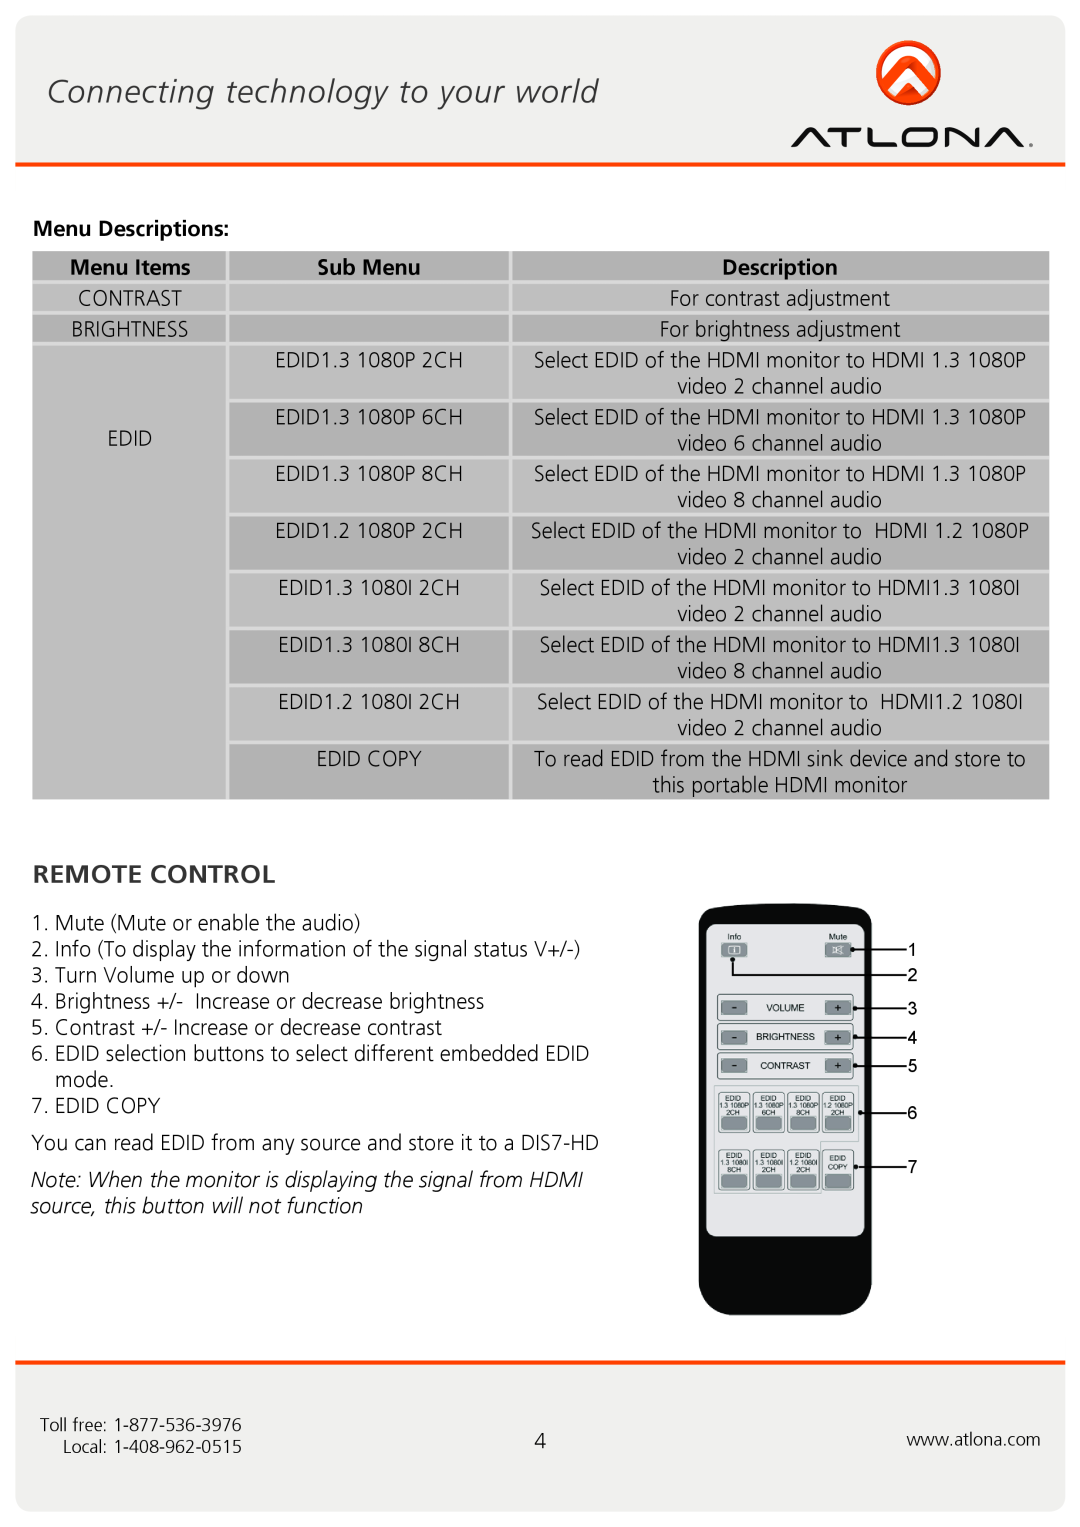 Atlona AT-DIS7-HD user manual Remote Control, Menu Descriptions, Menu Items, Sub Menu 